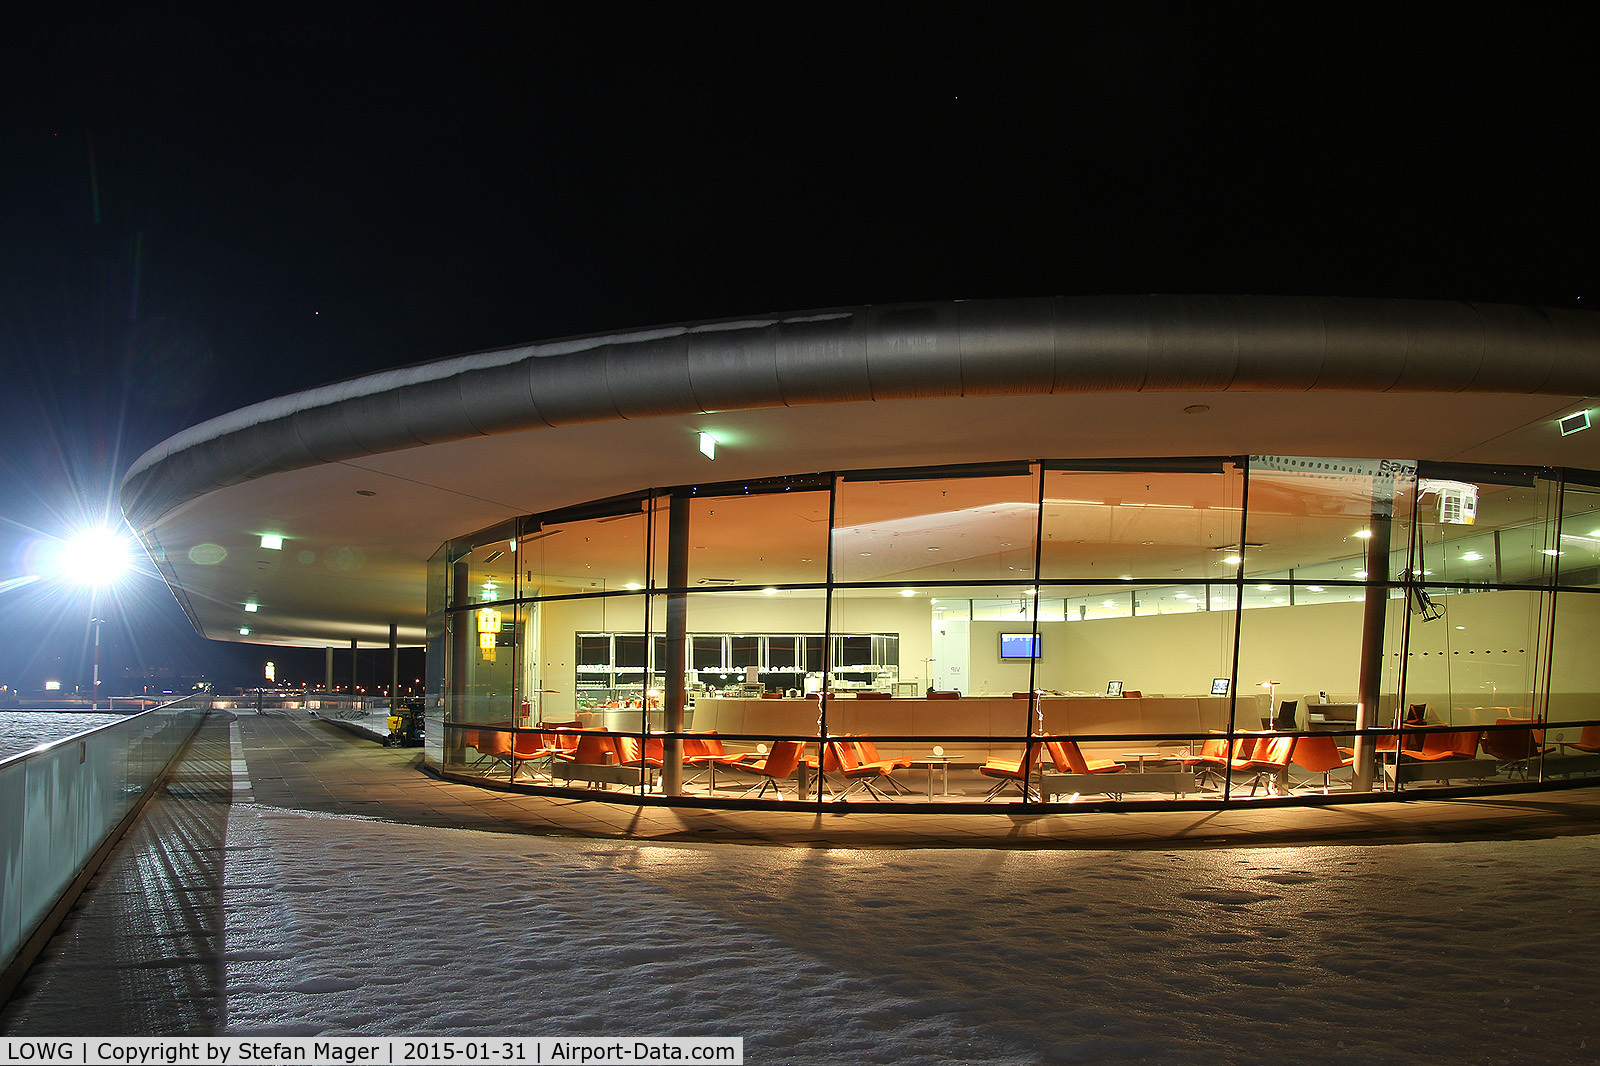 Graz Airport, Graz Austria (LOWG) - Graz Airport - VIP-lounge @ night